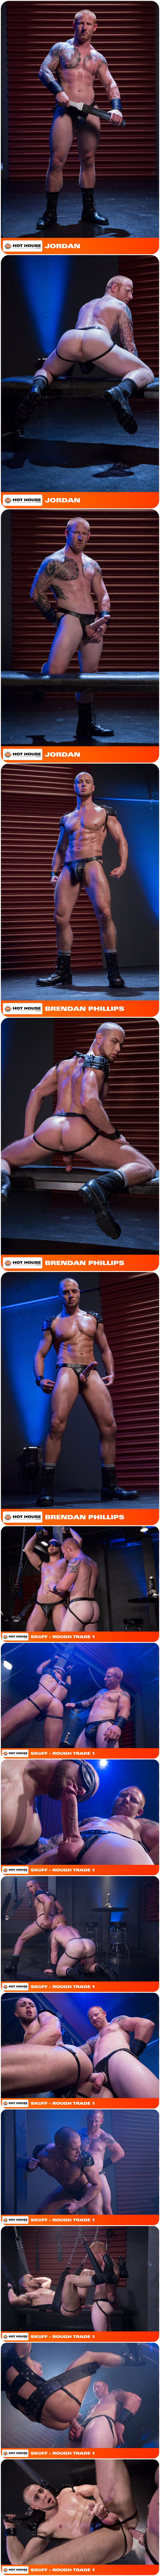 Hot House, Jordan, Brendan Phillips